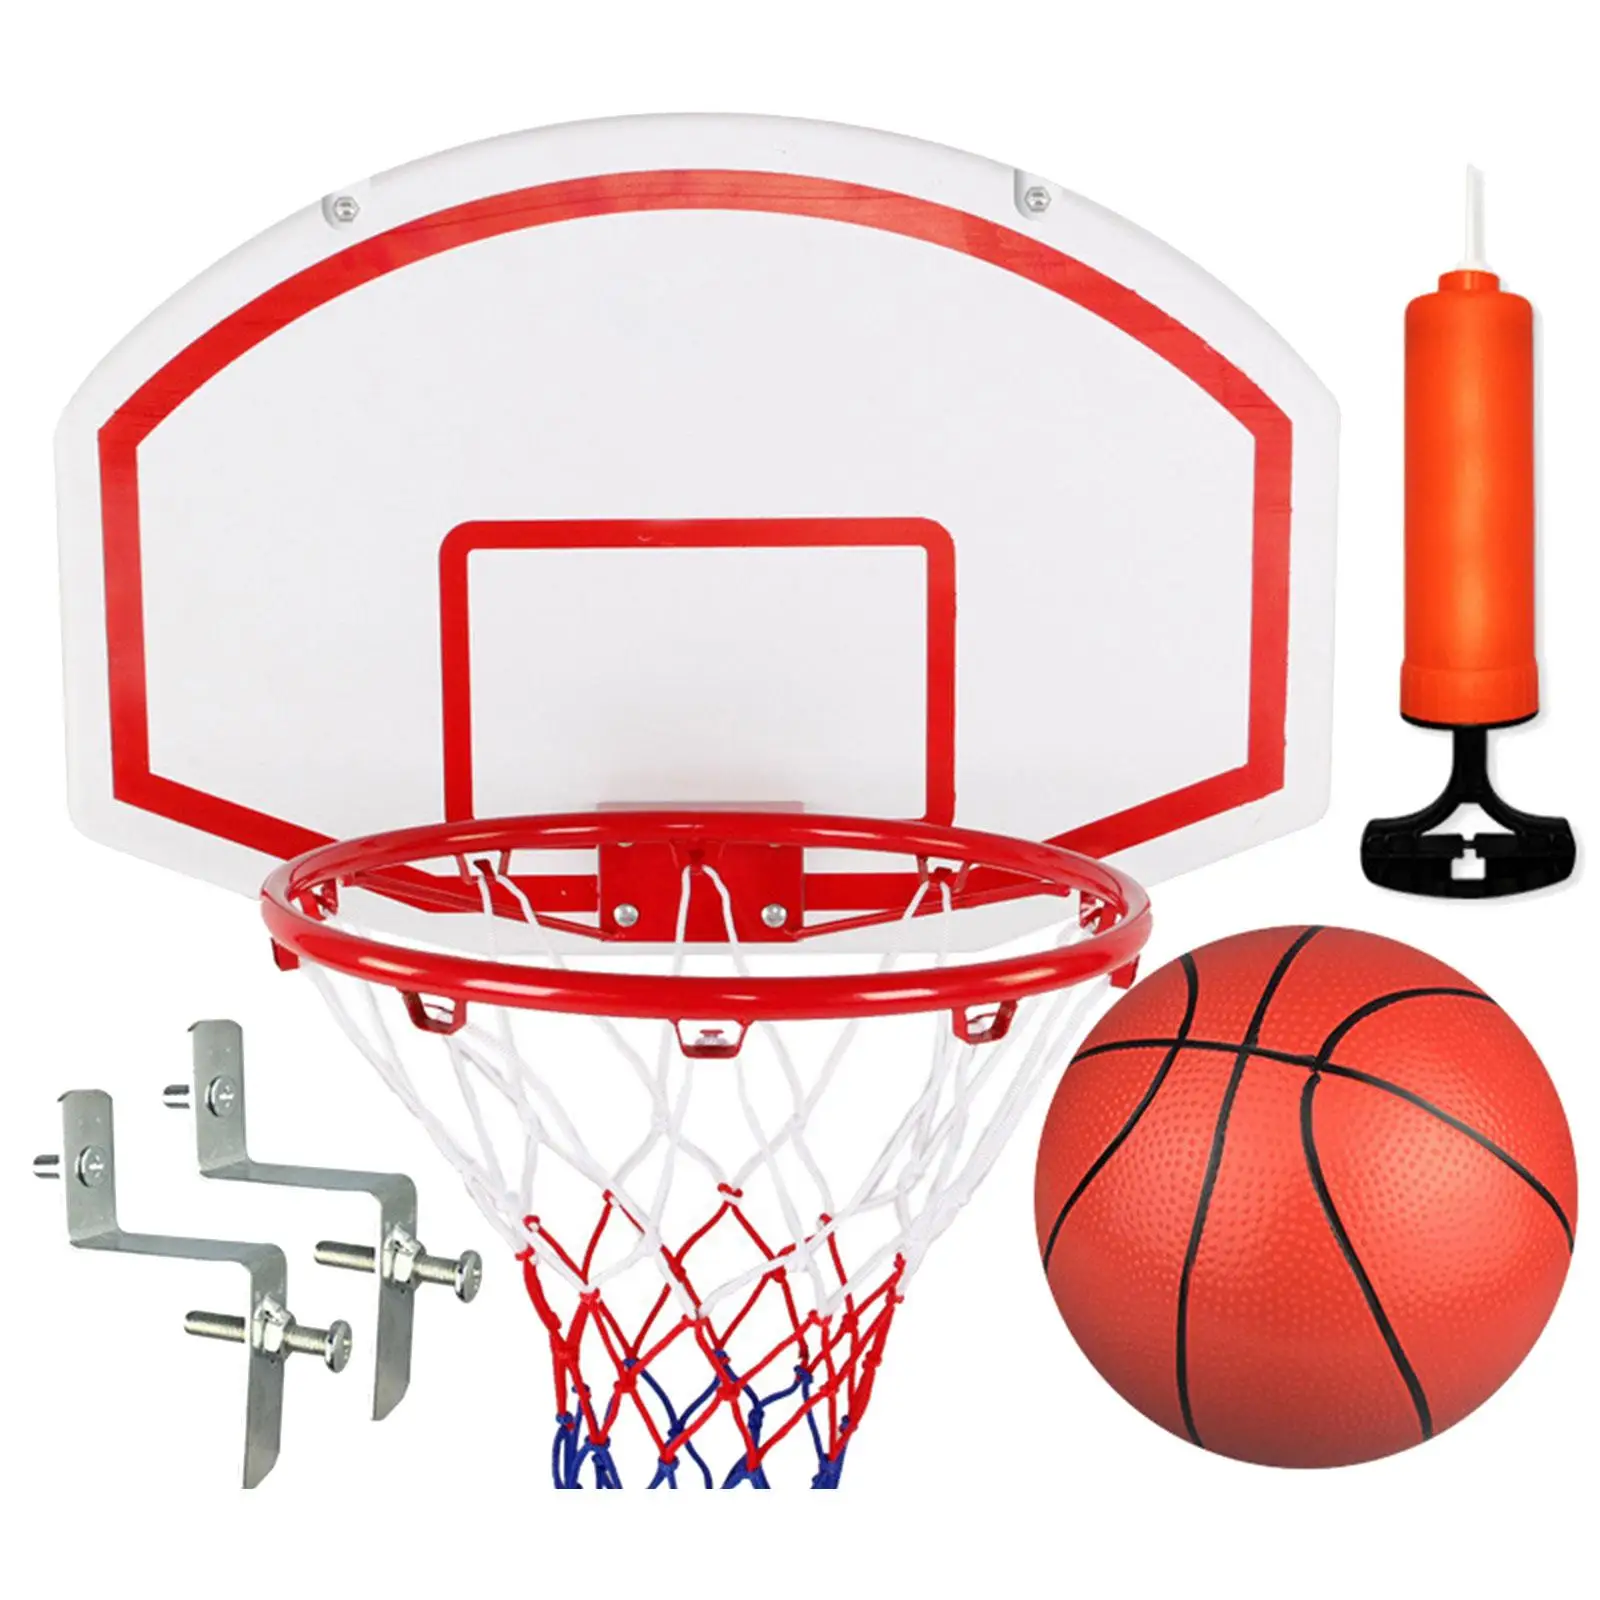 Wall Mounted Basketball Hoop Set Basketball Toy Gifts Basketball Hoop over The Door for Basketball Lover Basketball Training